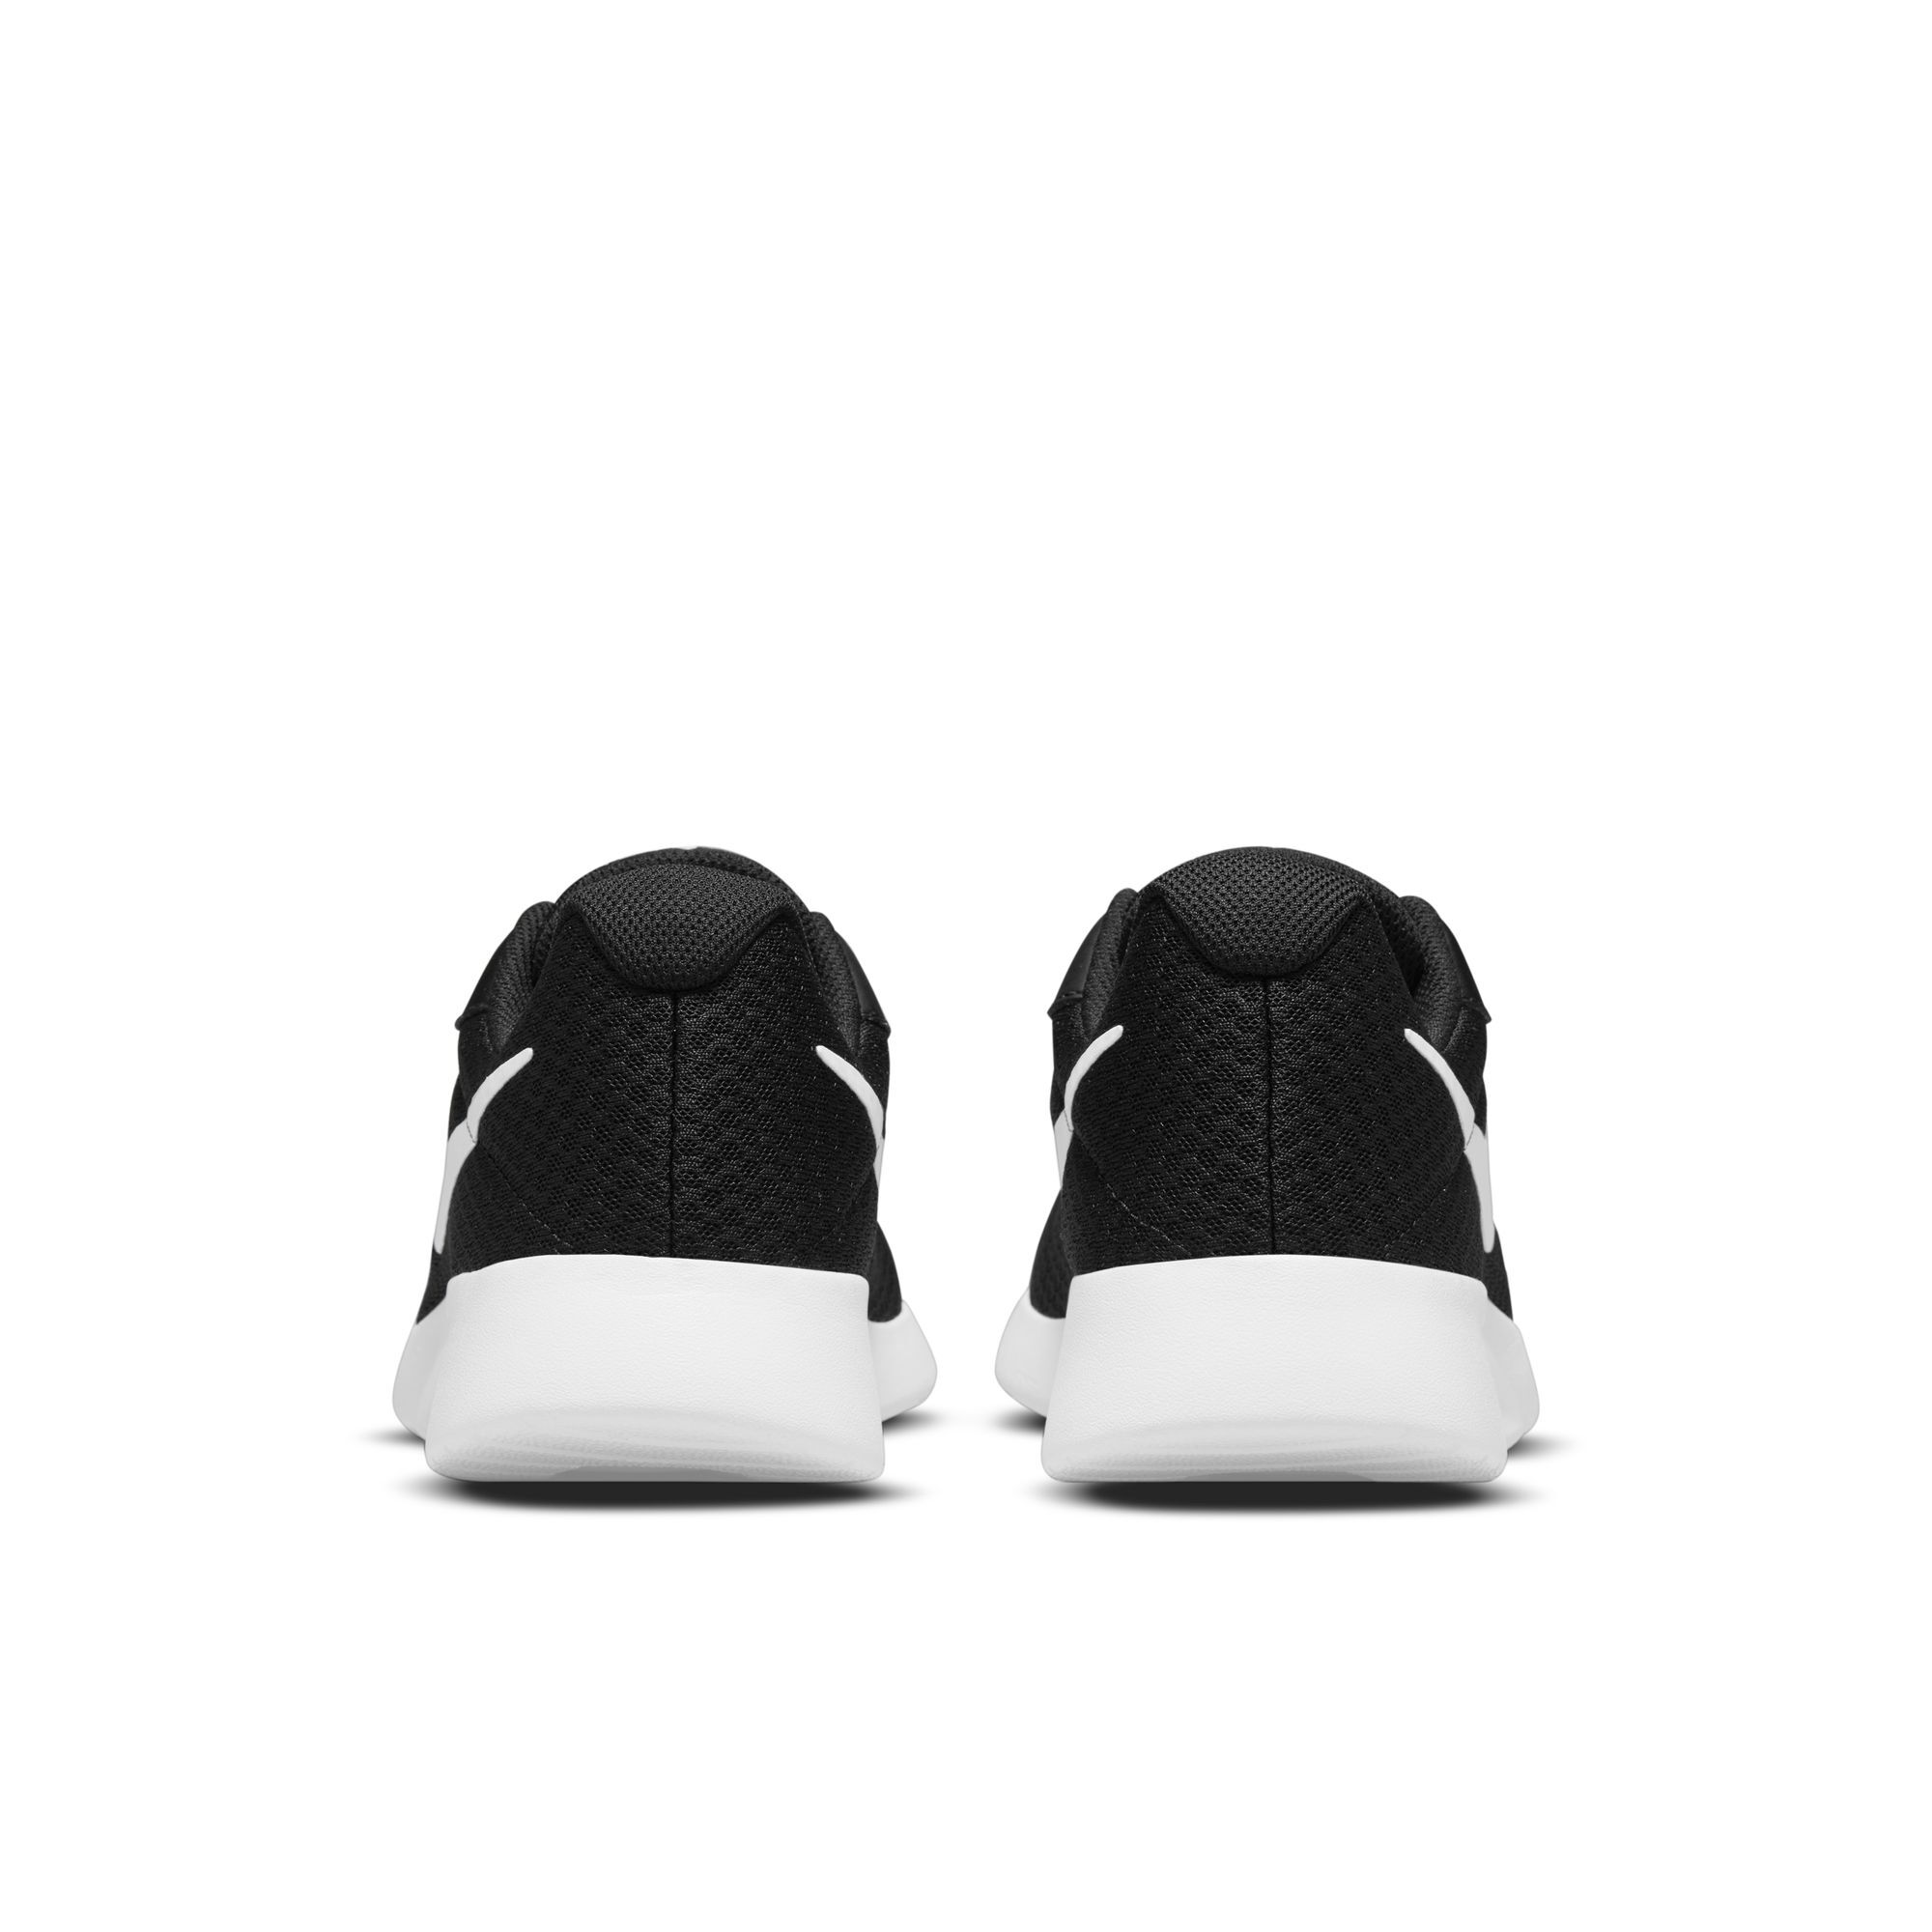 Nike Tanjun, Negro/Voltio ligero/Negro/Blanco, hi-res